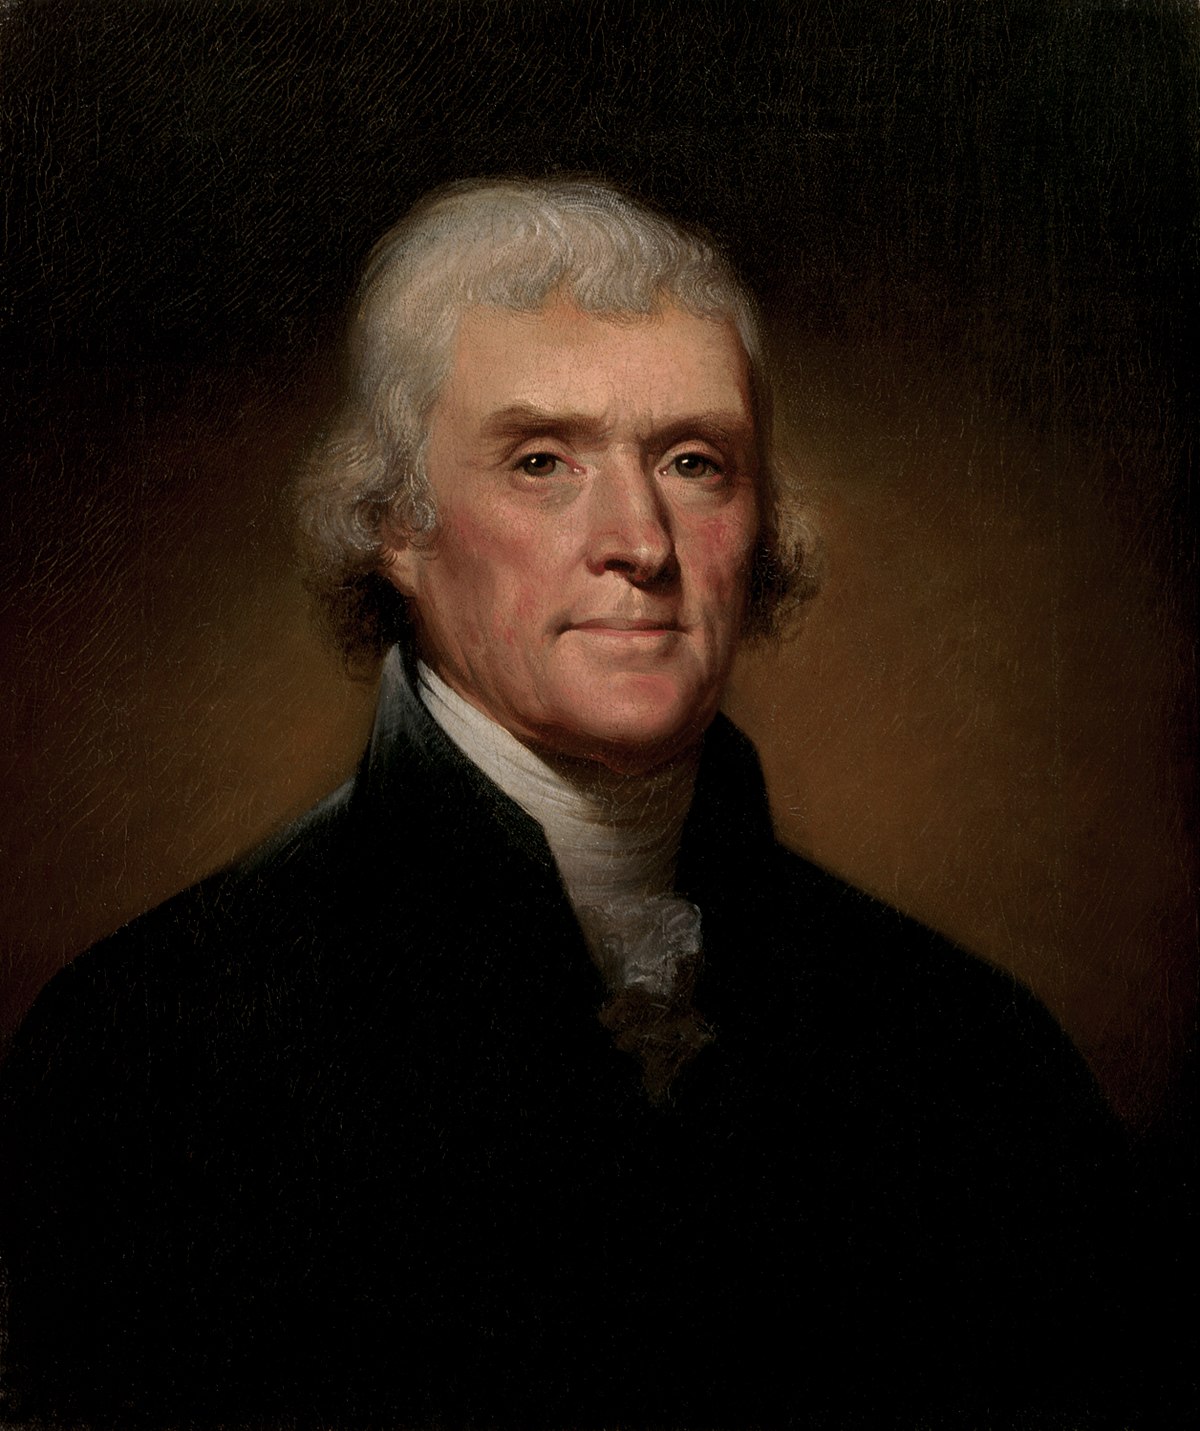 The portrait of Thomas Jefferson